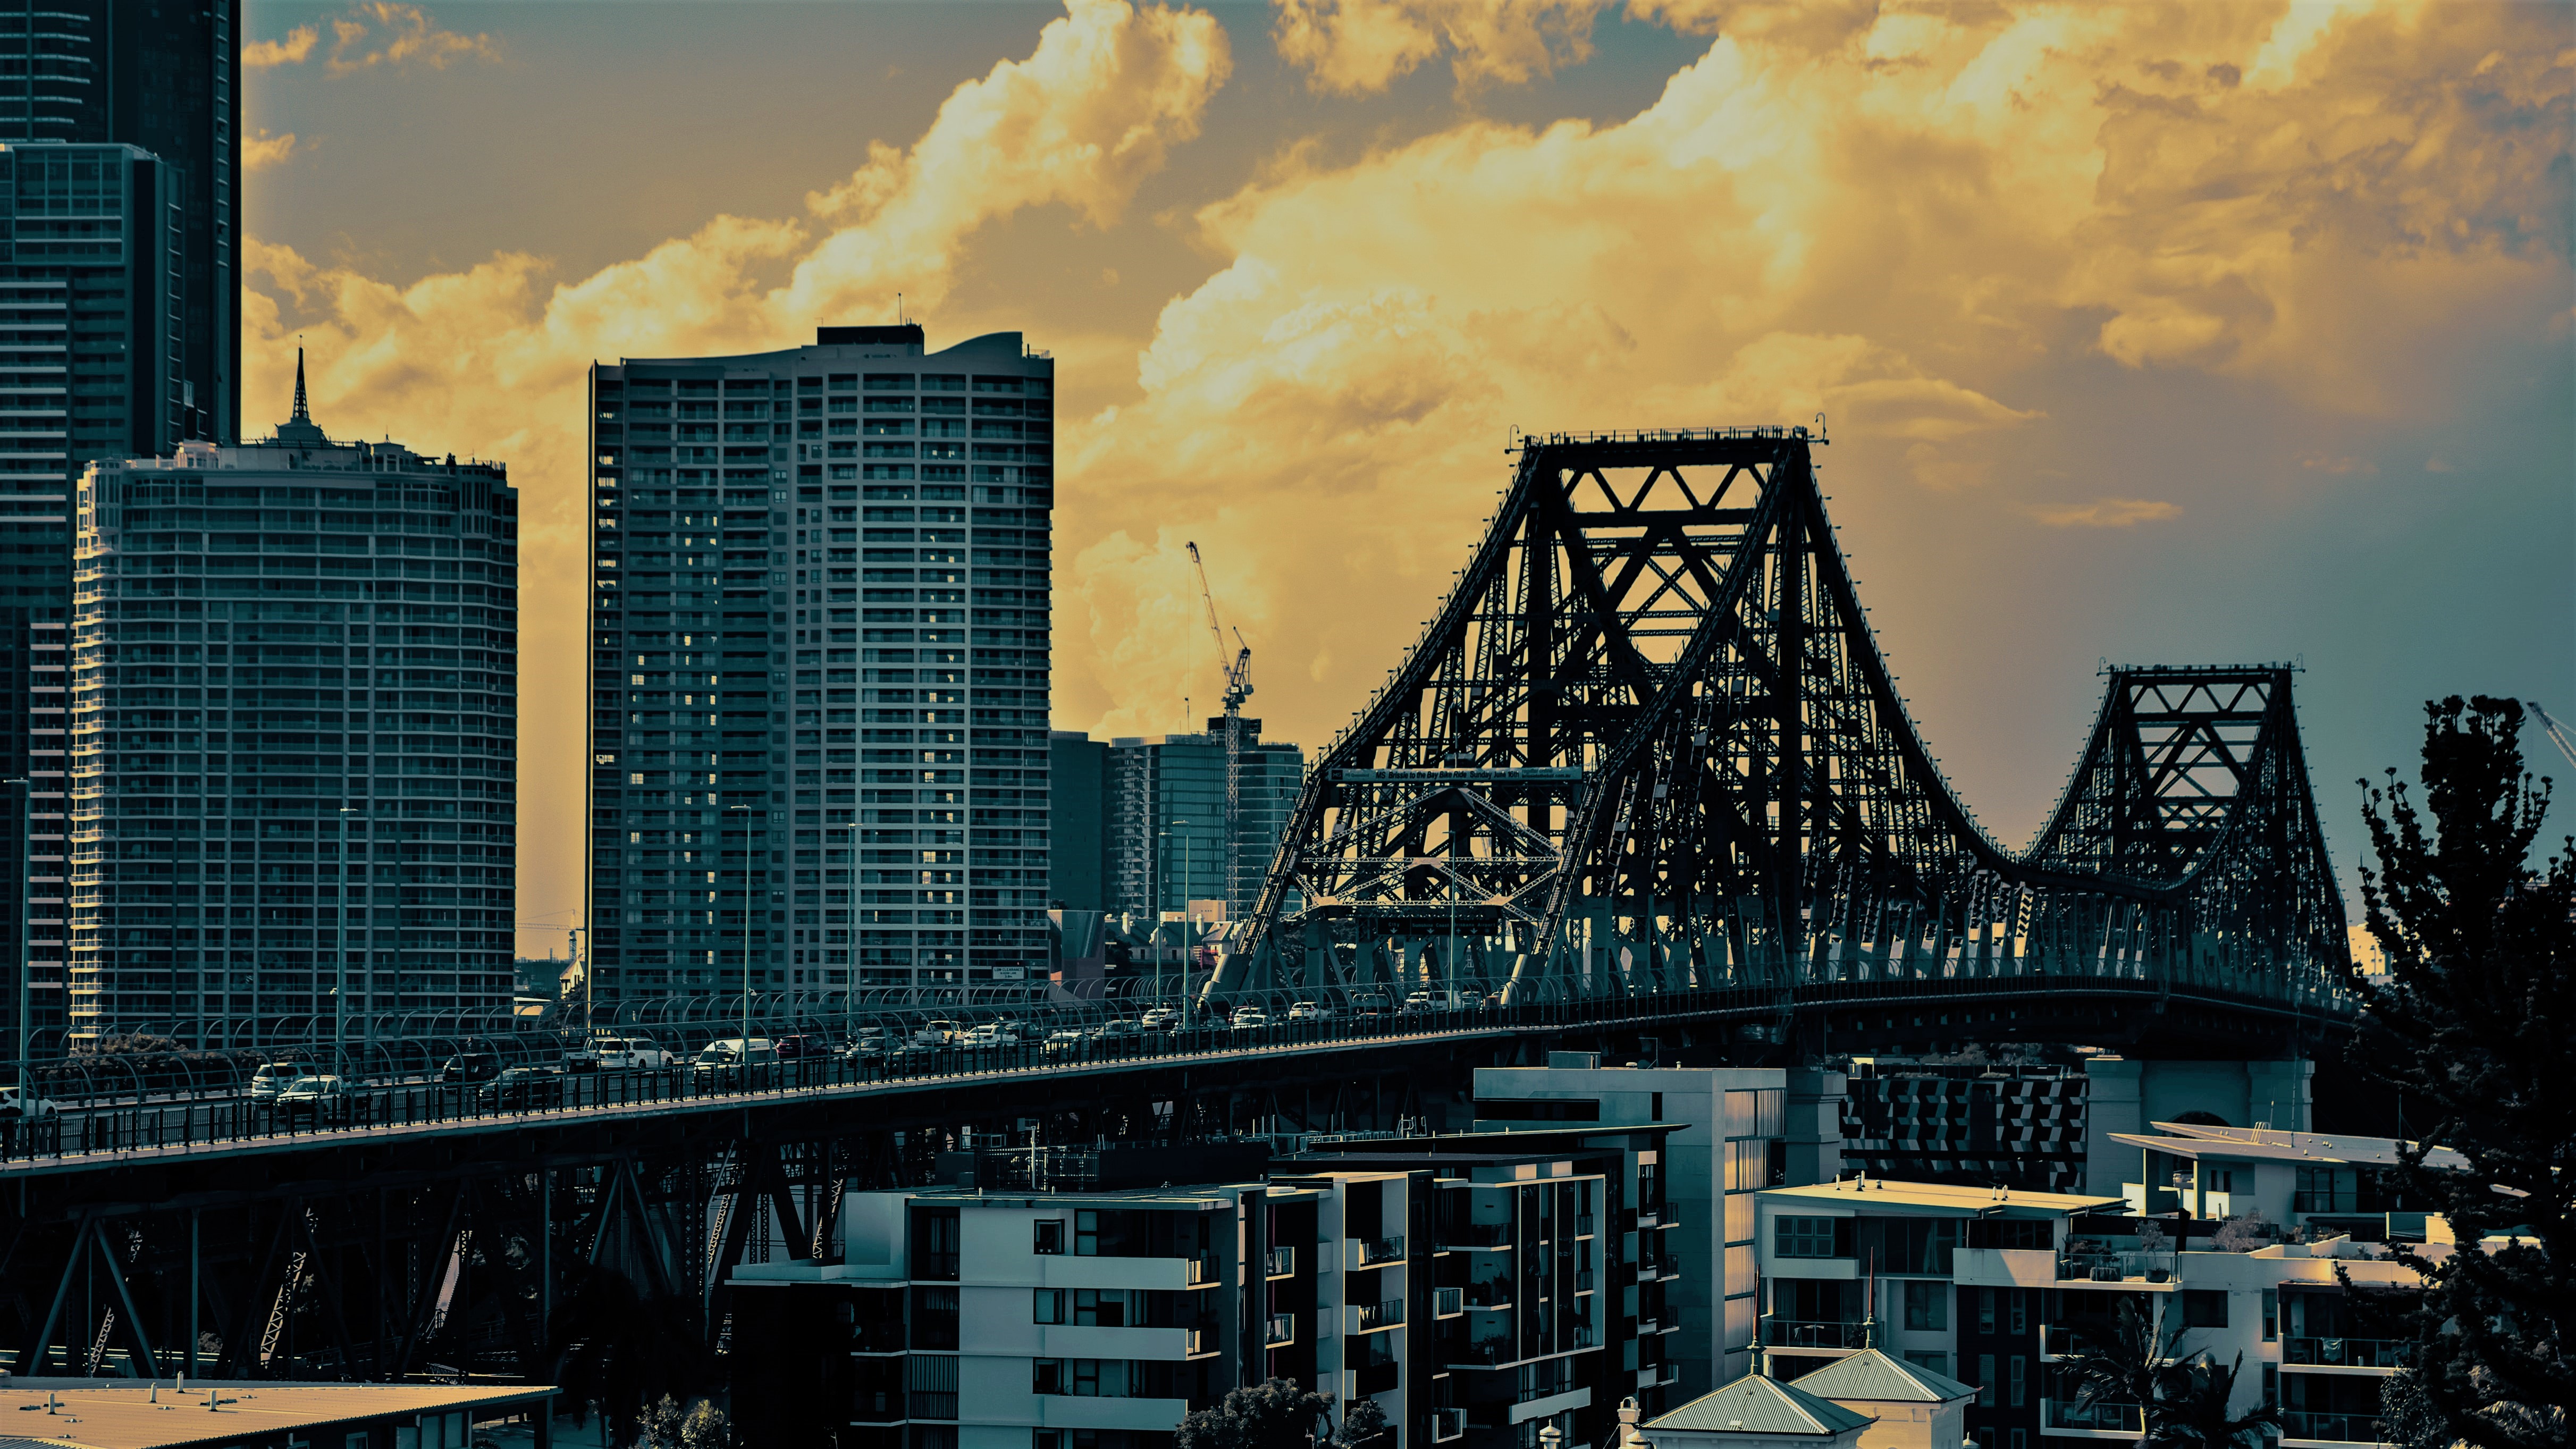 Story bridge in Brisbane, Queensland Australia at sunset